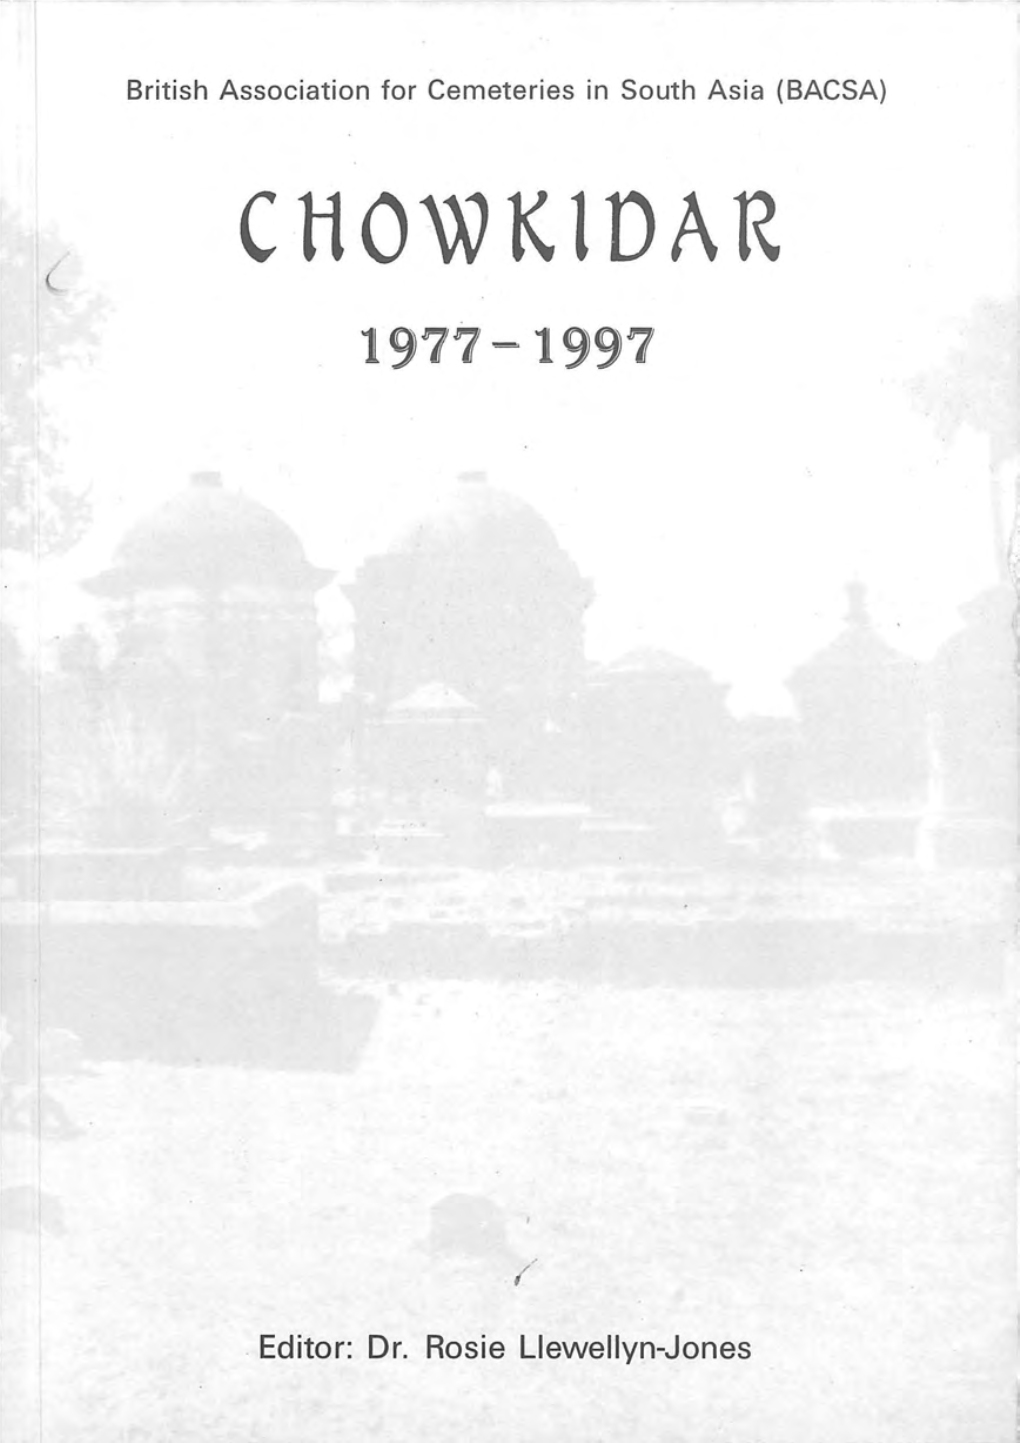 Chowkidar 1977 1997.Pdf